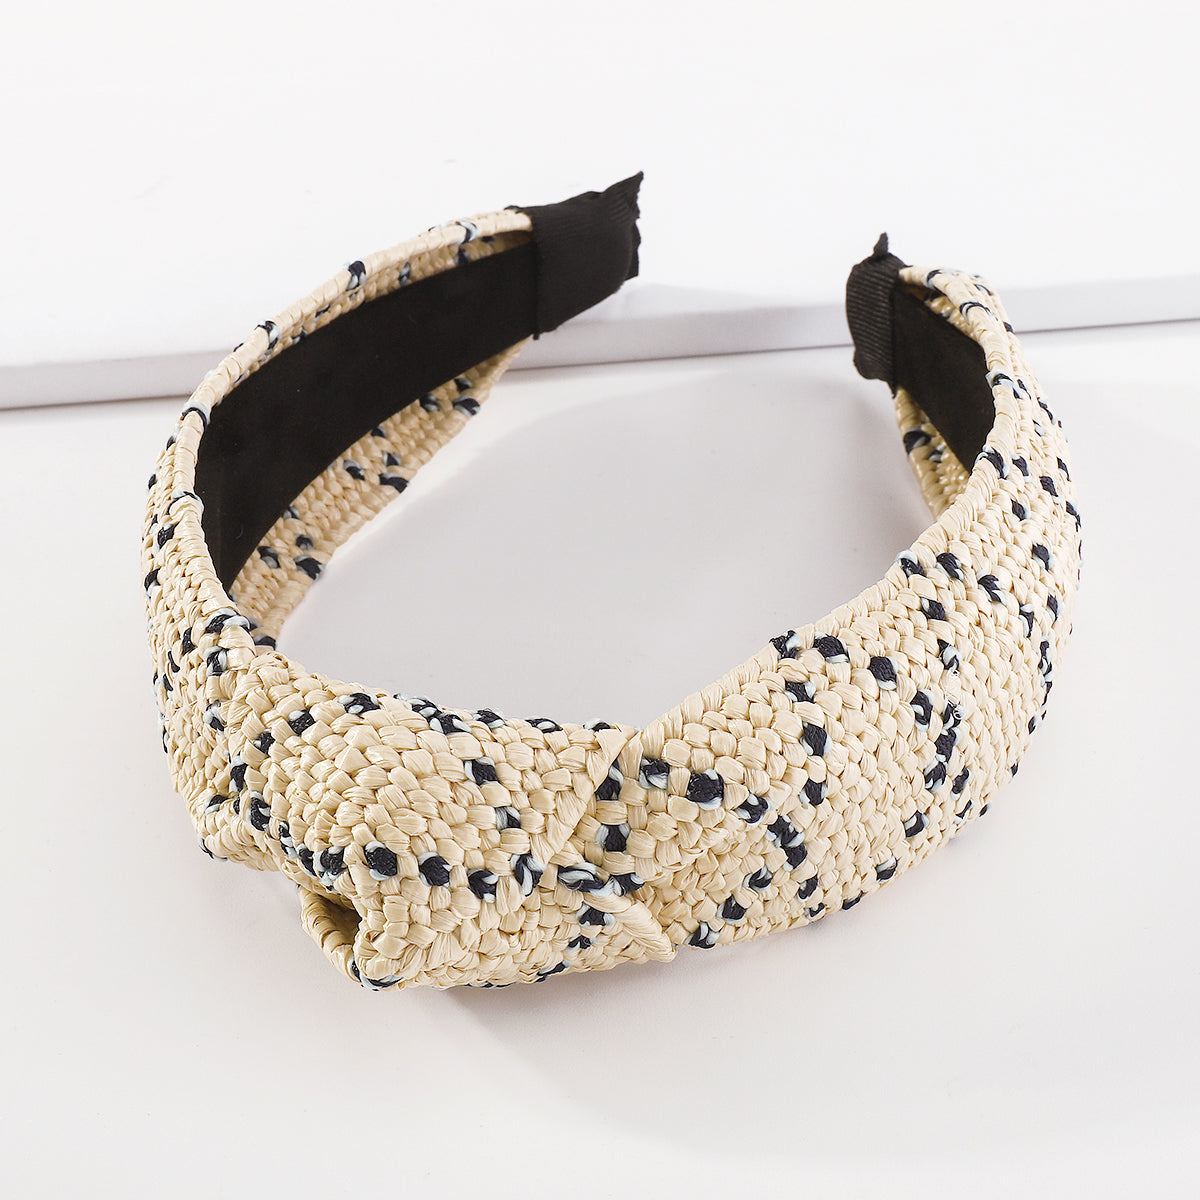 Boho Summer Straw Weaving Knotted Headband medyjewelry